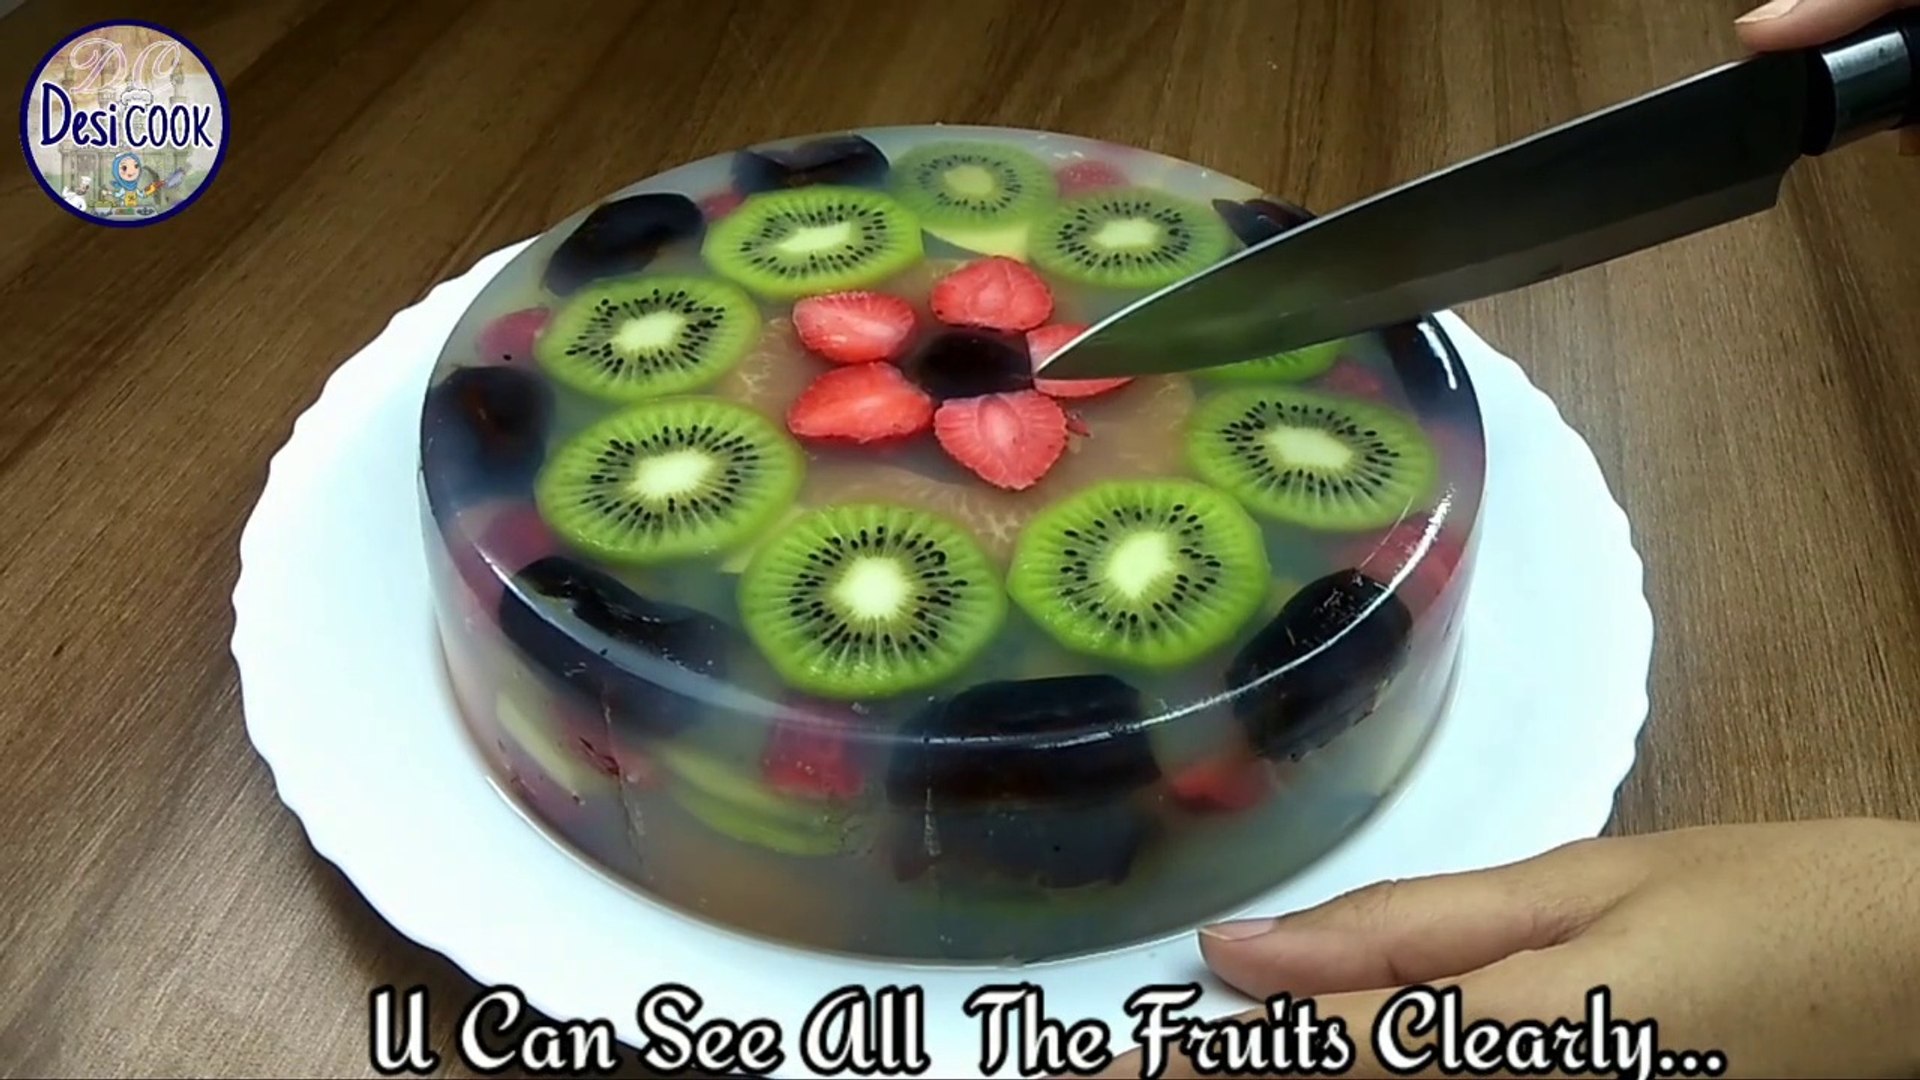 Jelly Fruit Cake